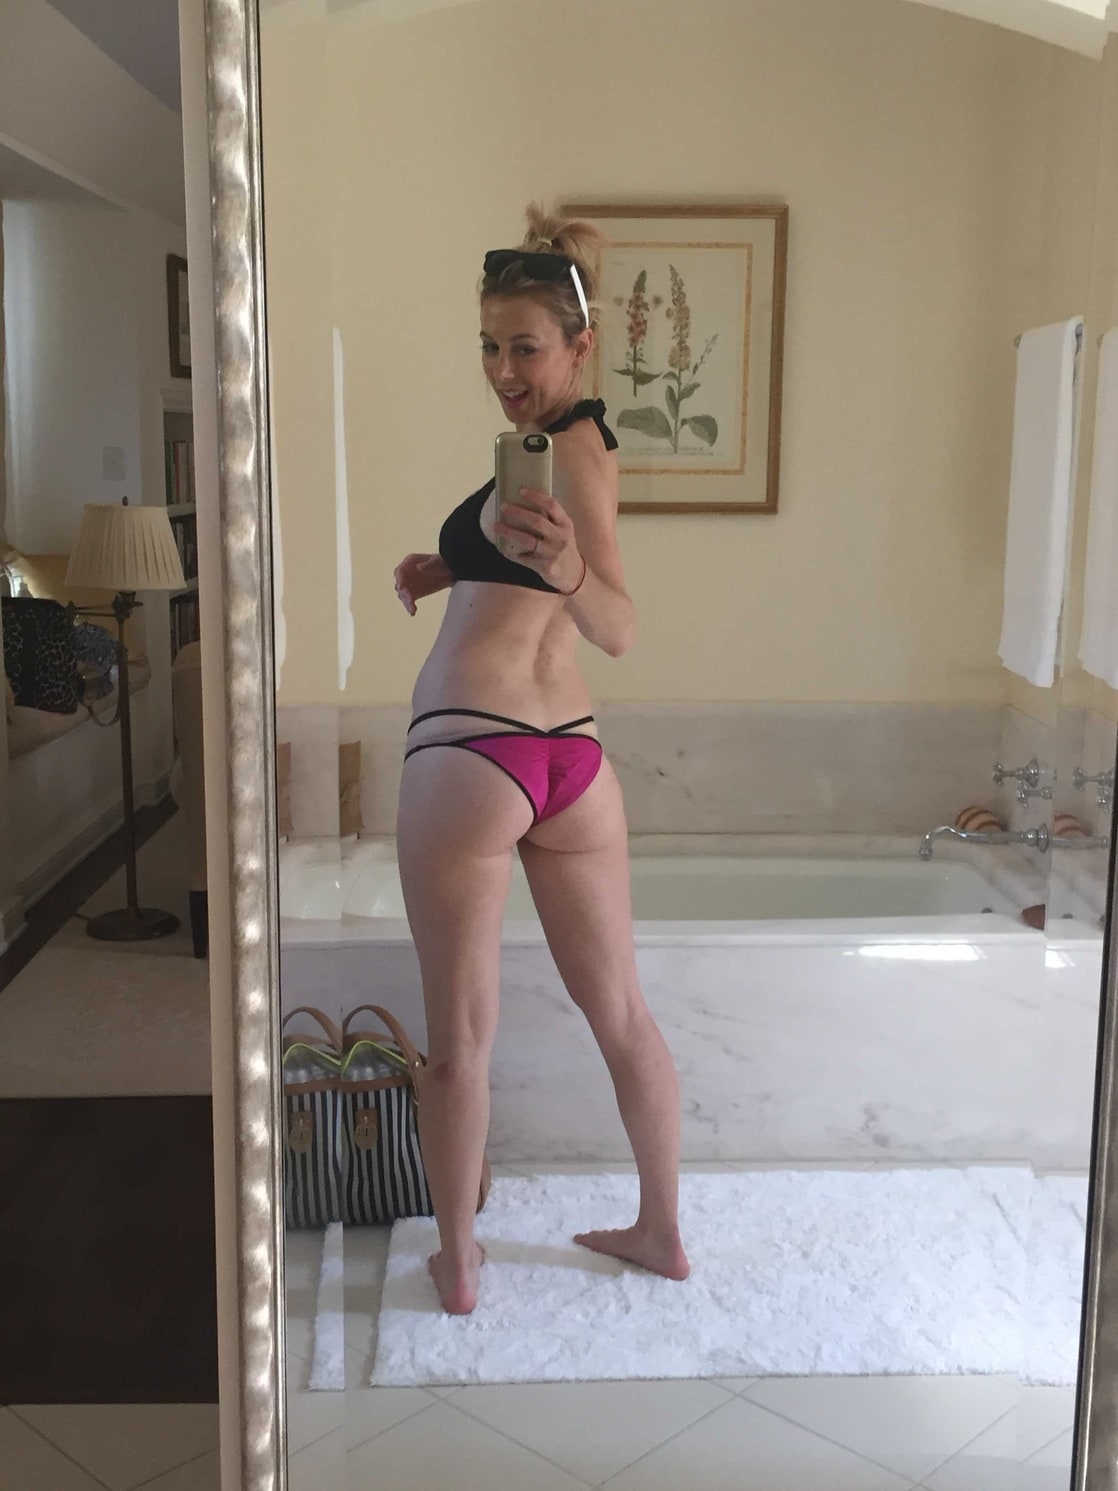 Iliza shlesinger in a bikini